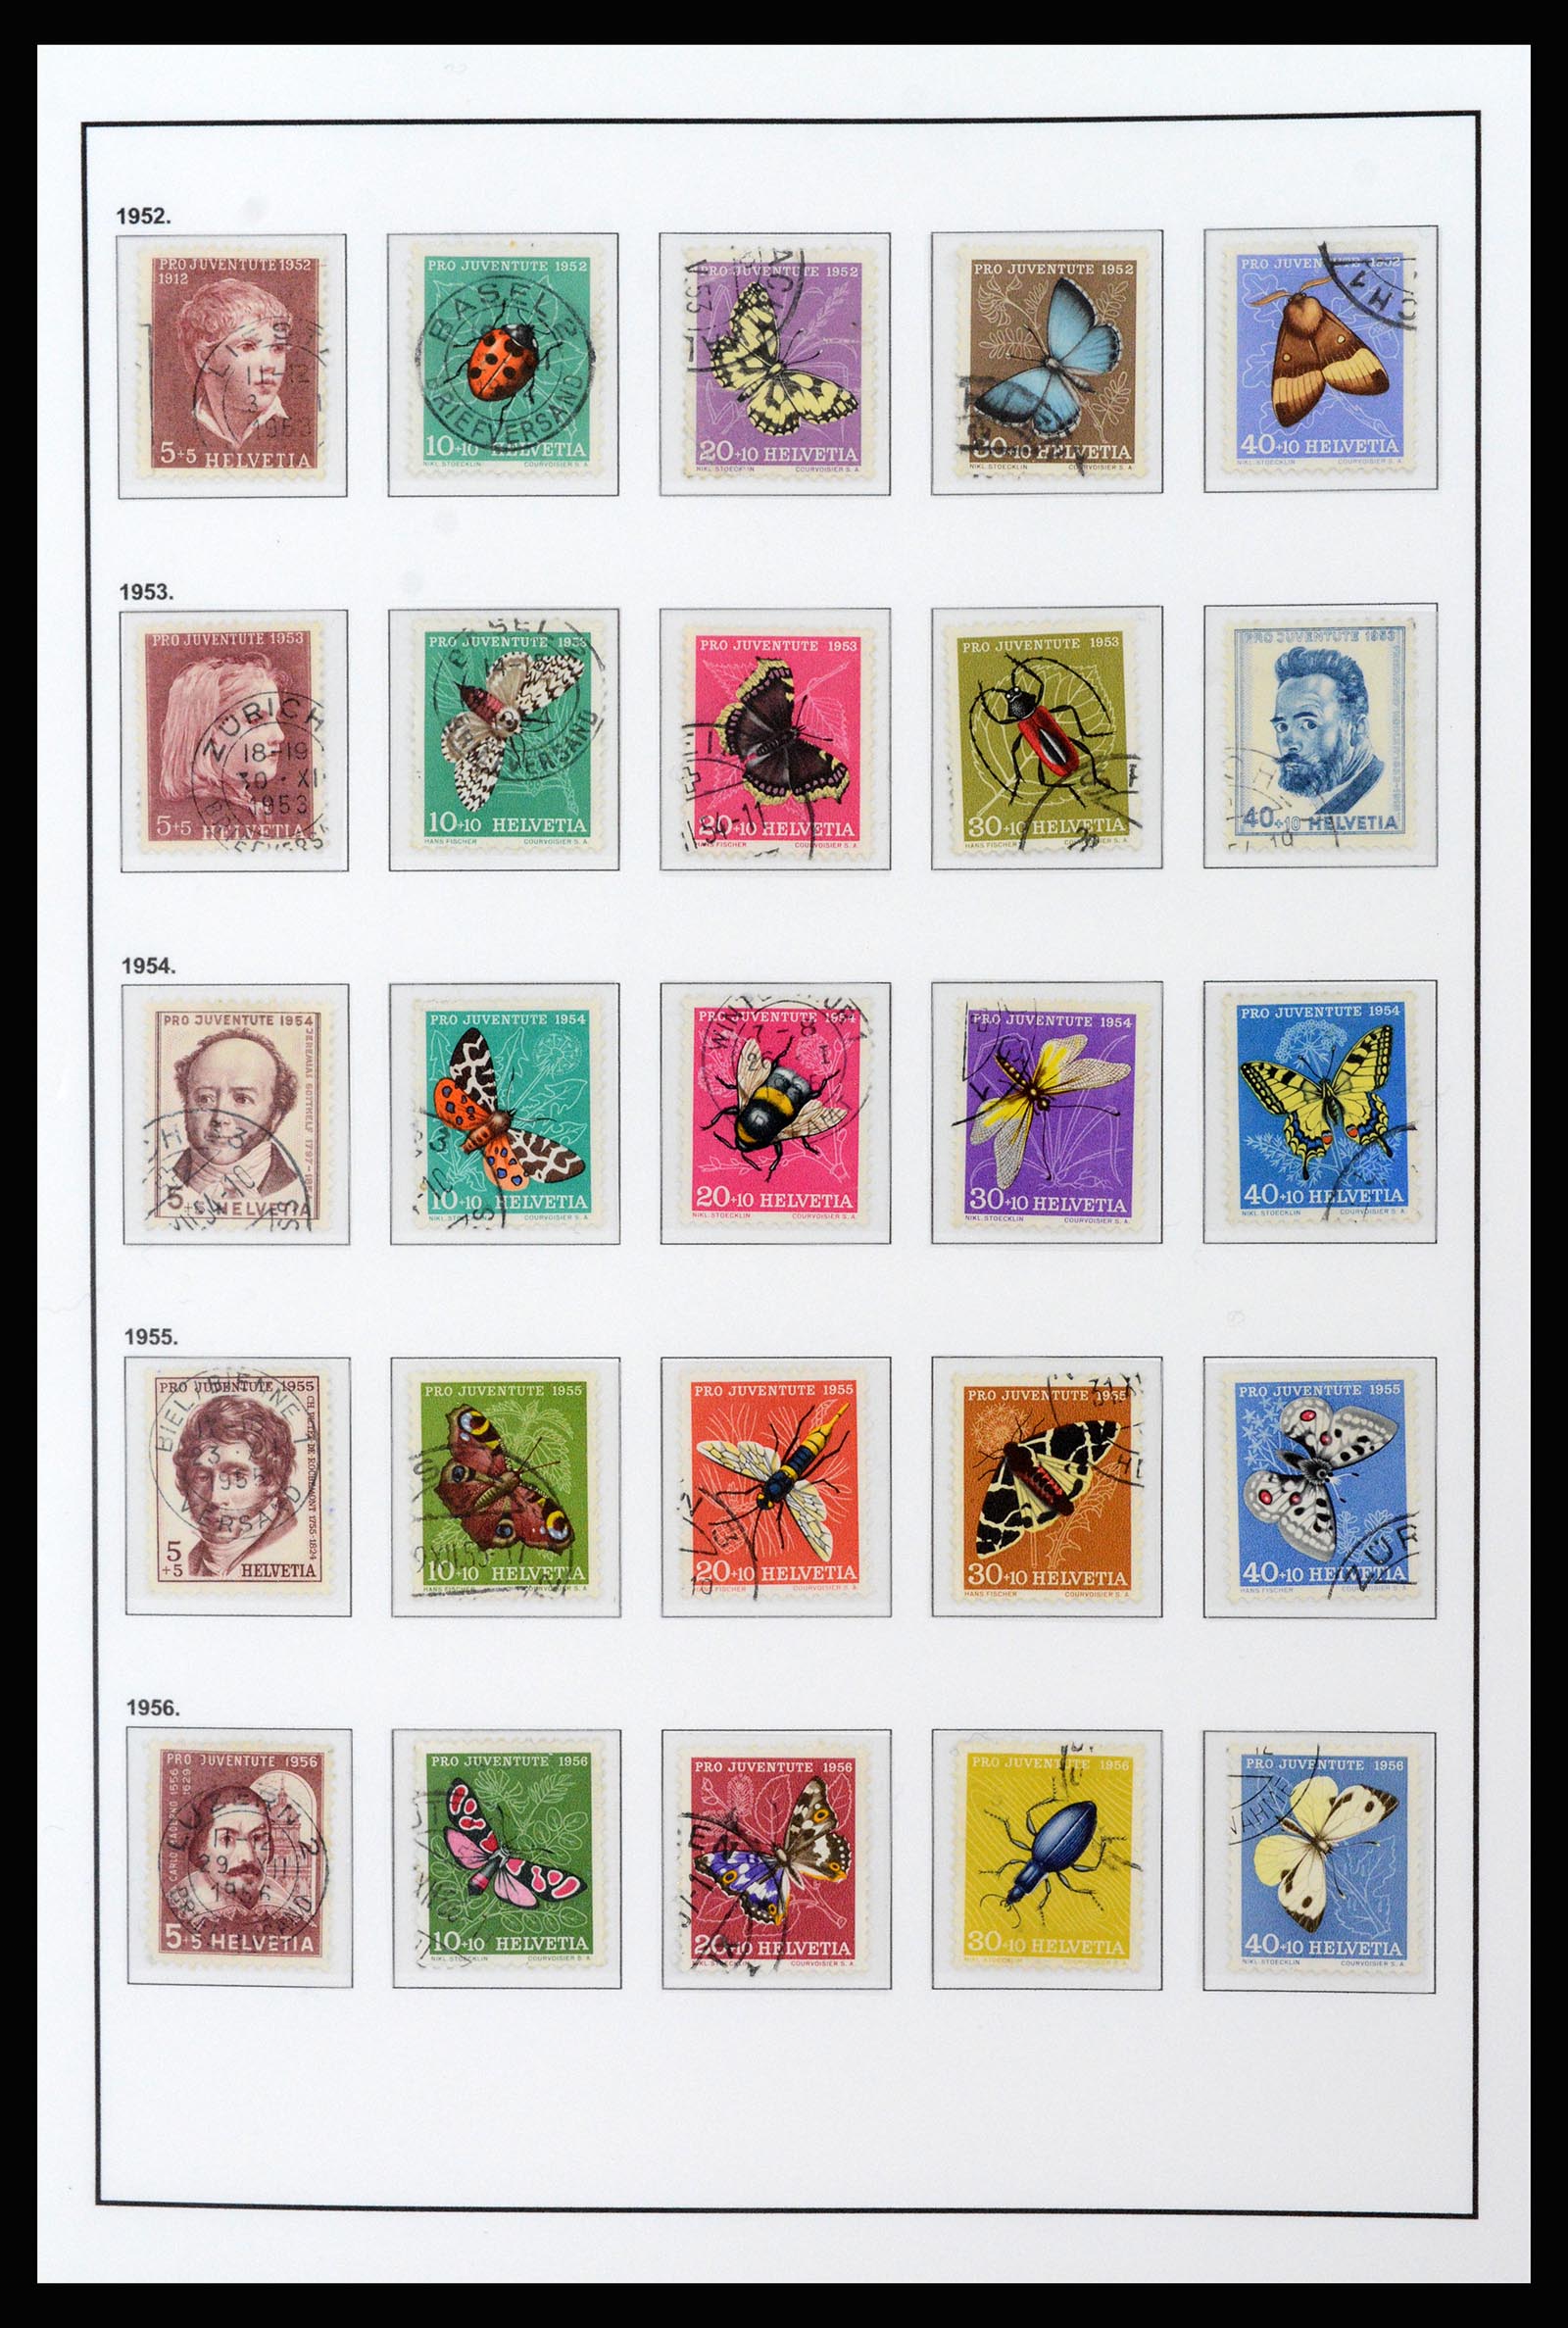 37225 063 - Stamp collection 37225 Switzerland 1854-2020.